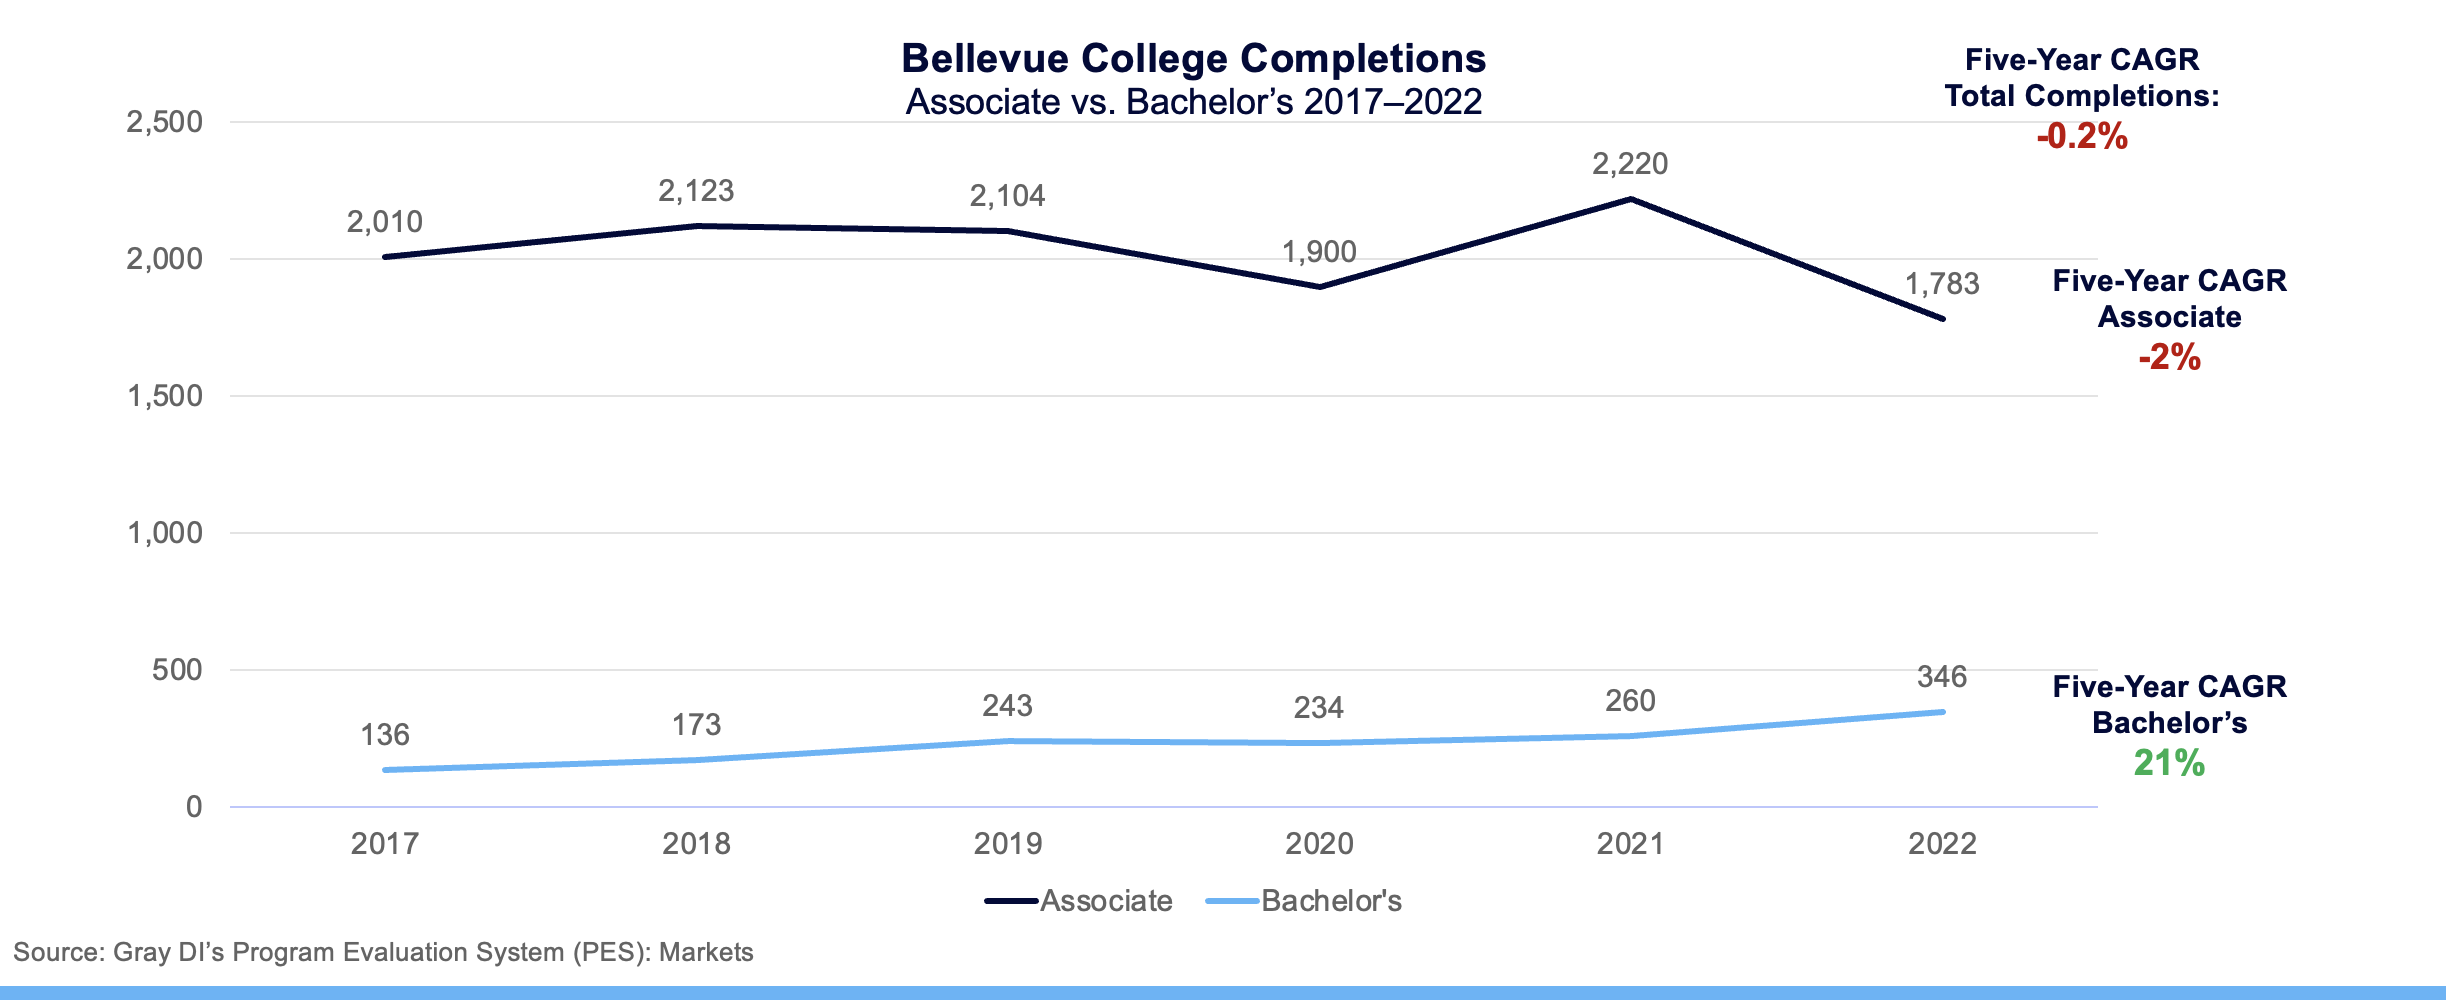 Bellevue College Completions (Associate vs Bachelor's 2017-2022)